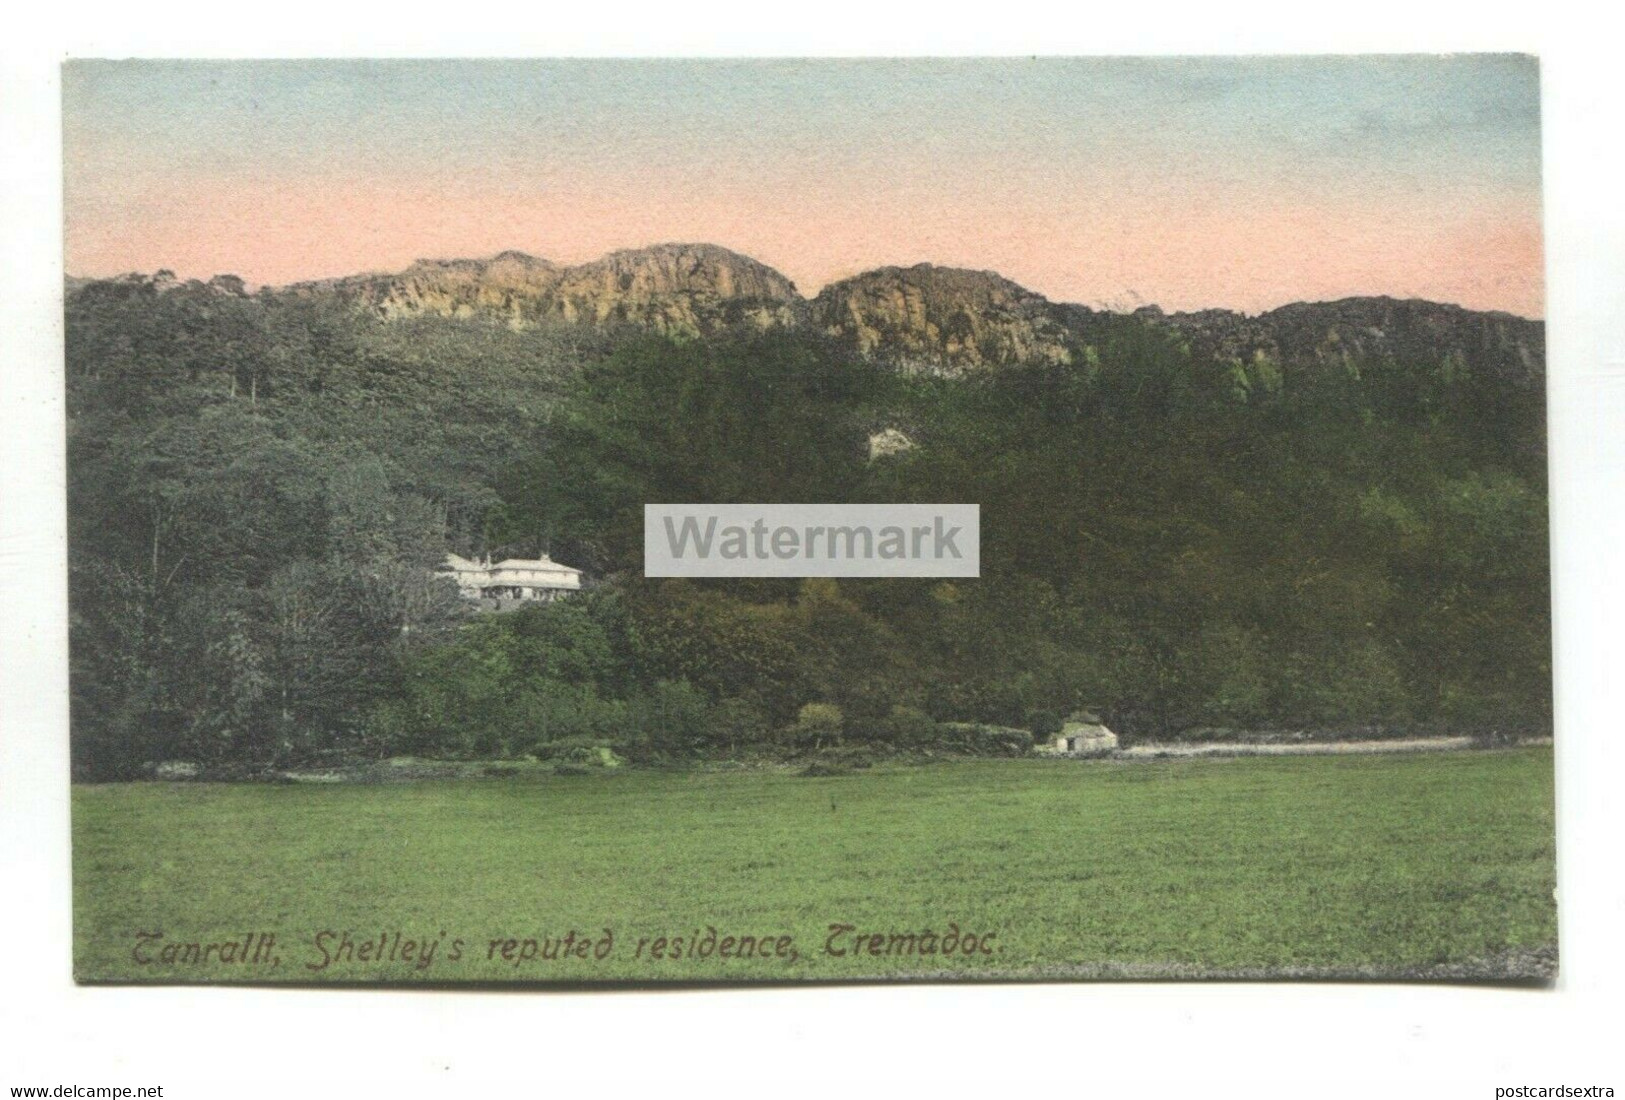 Tremadoc / Tremadog - Tan-yr-Allt, Shelley's Reputed Residence - Old Postcard - Caernarvonshire